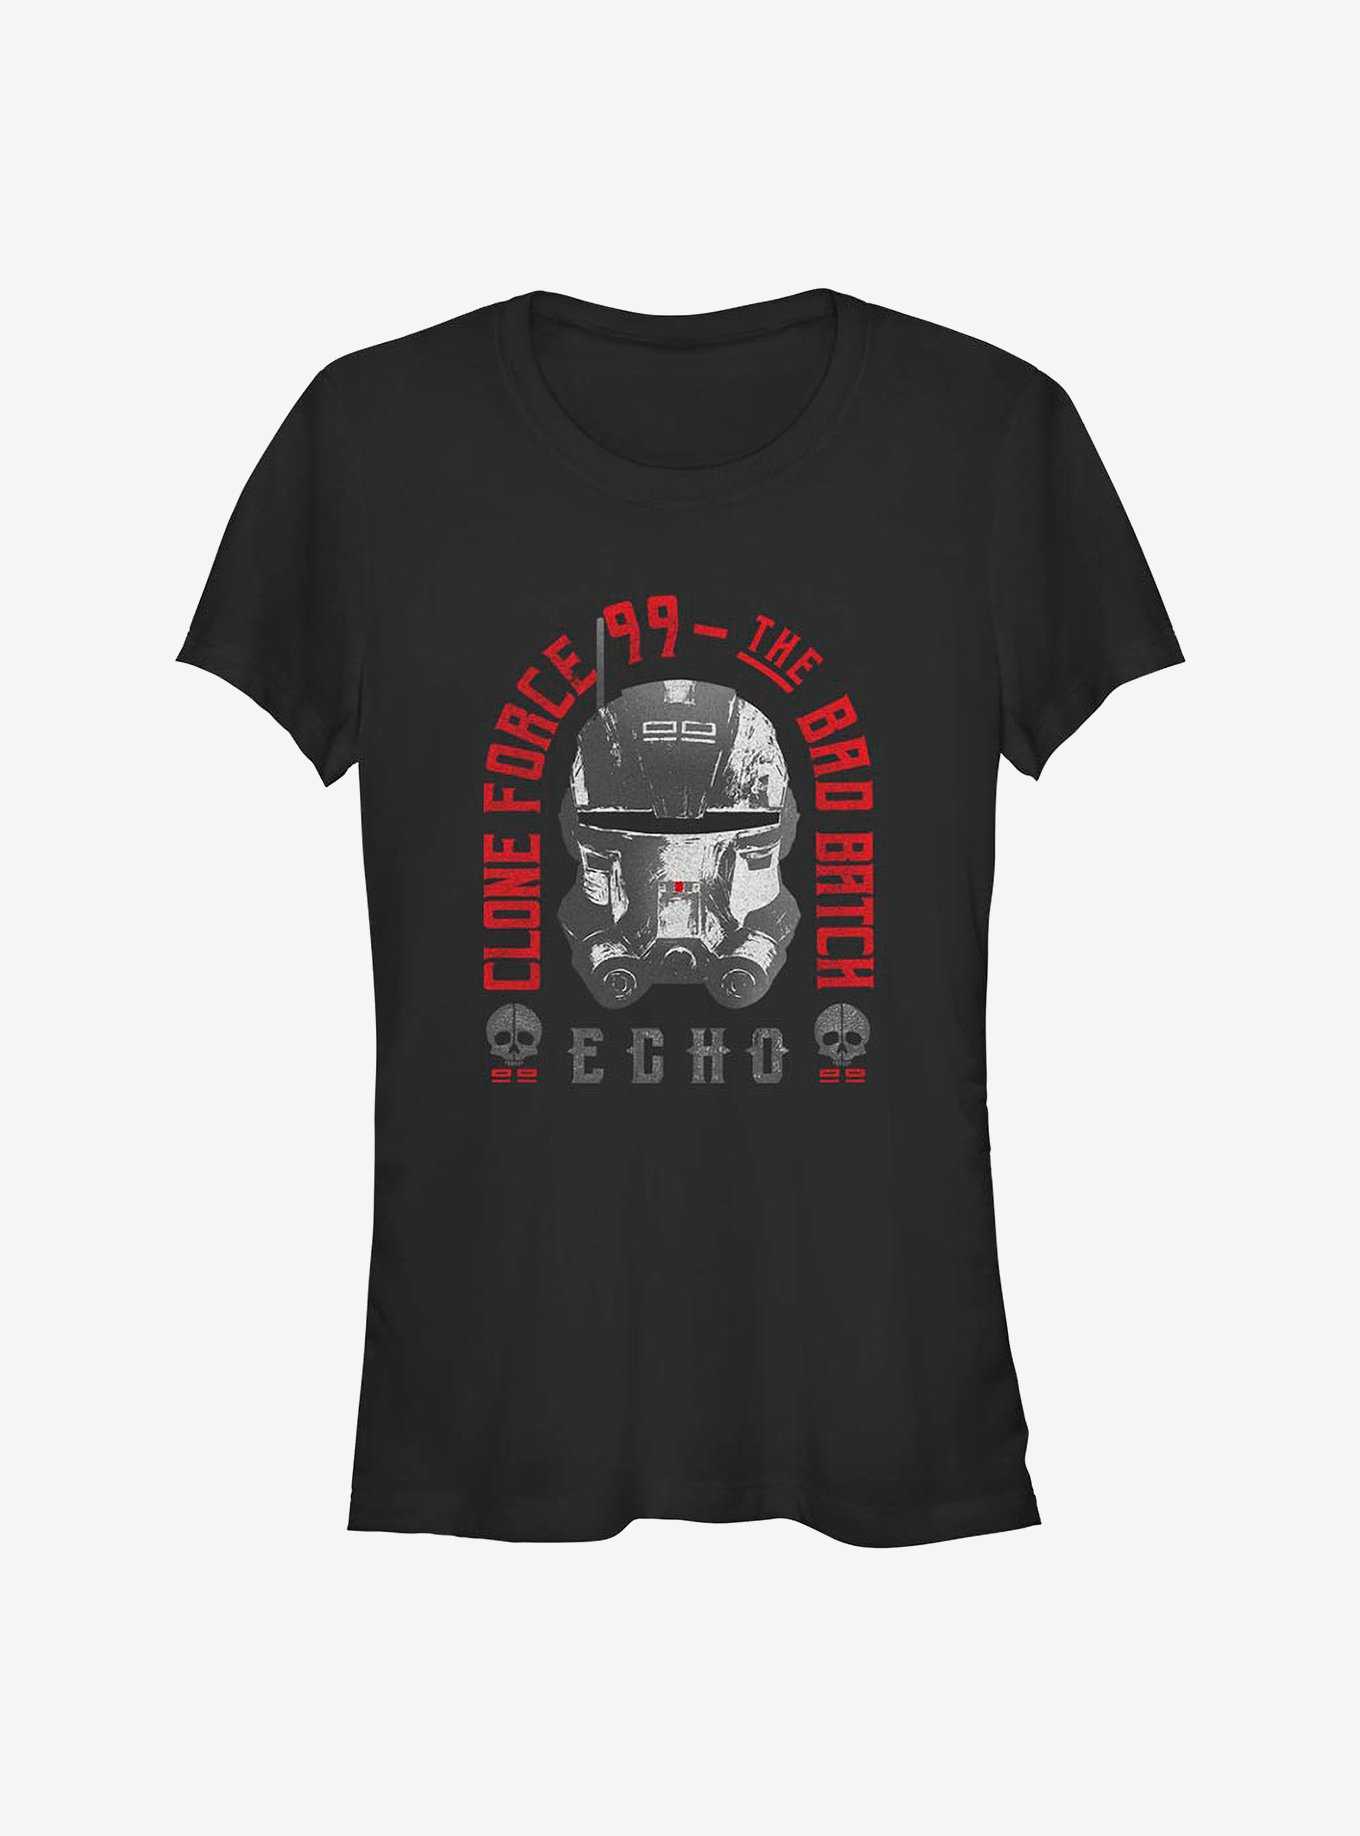 Star Wars: The Bad Batch Clone Force 99 Echo Girls T-Shirt, , hi-res